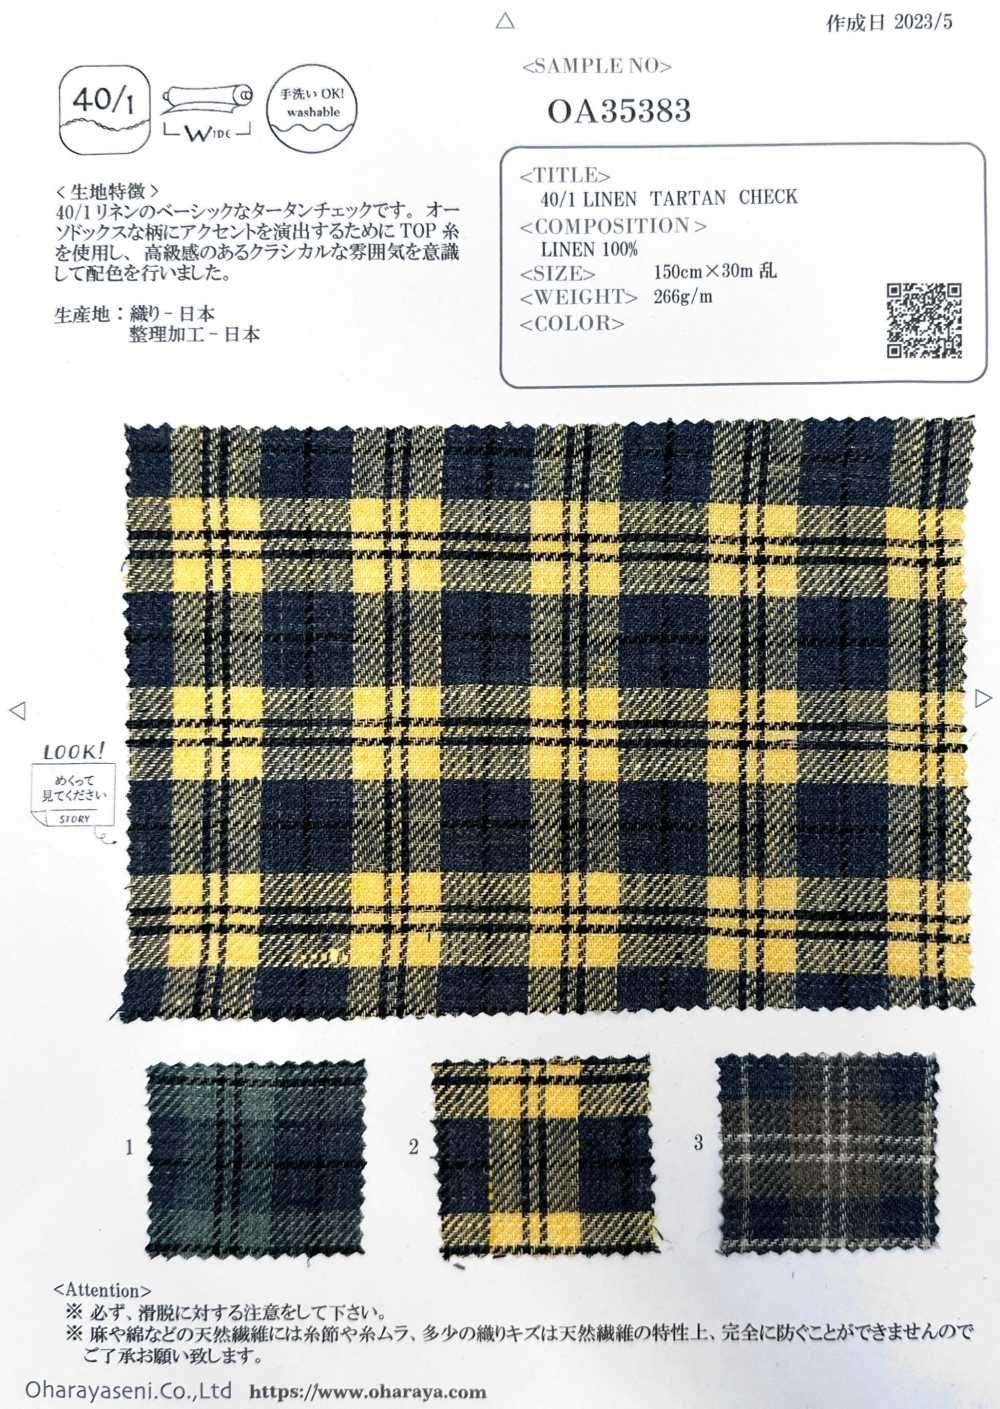 OA35383 40/1 LINEN TARTAN CHECK[Textile / Fabric] Oharayaseni